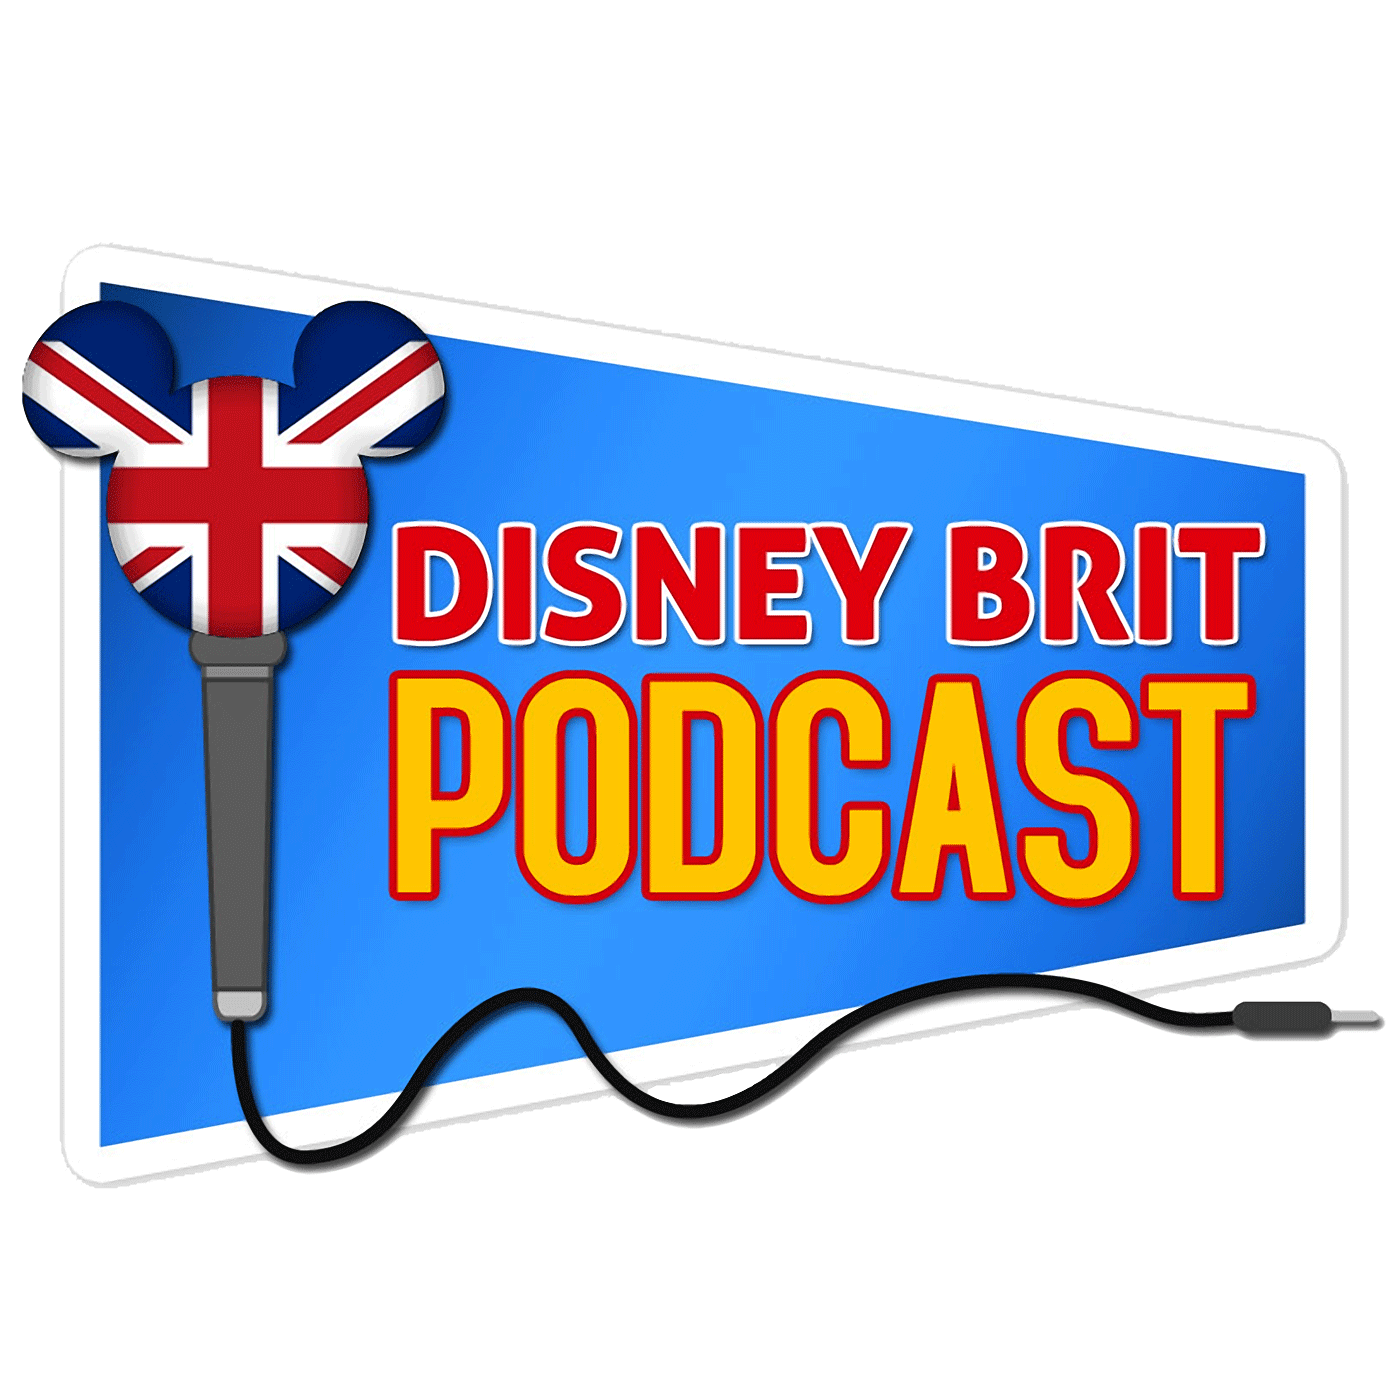 Disneybrit Podcast - Episode 117